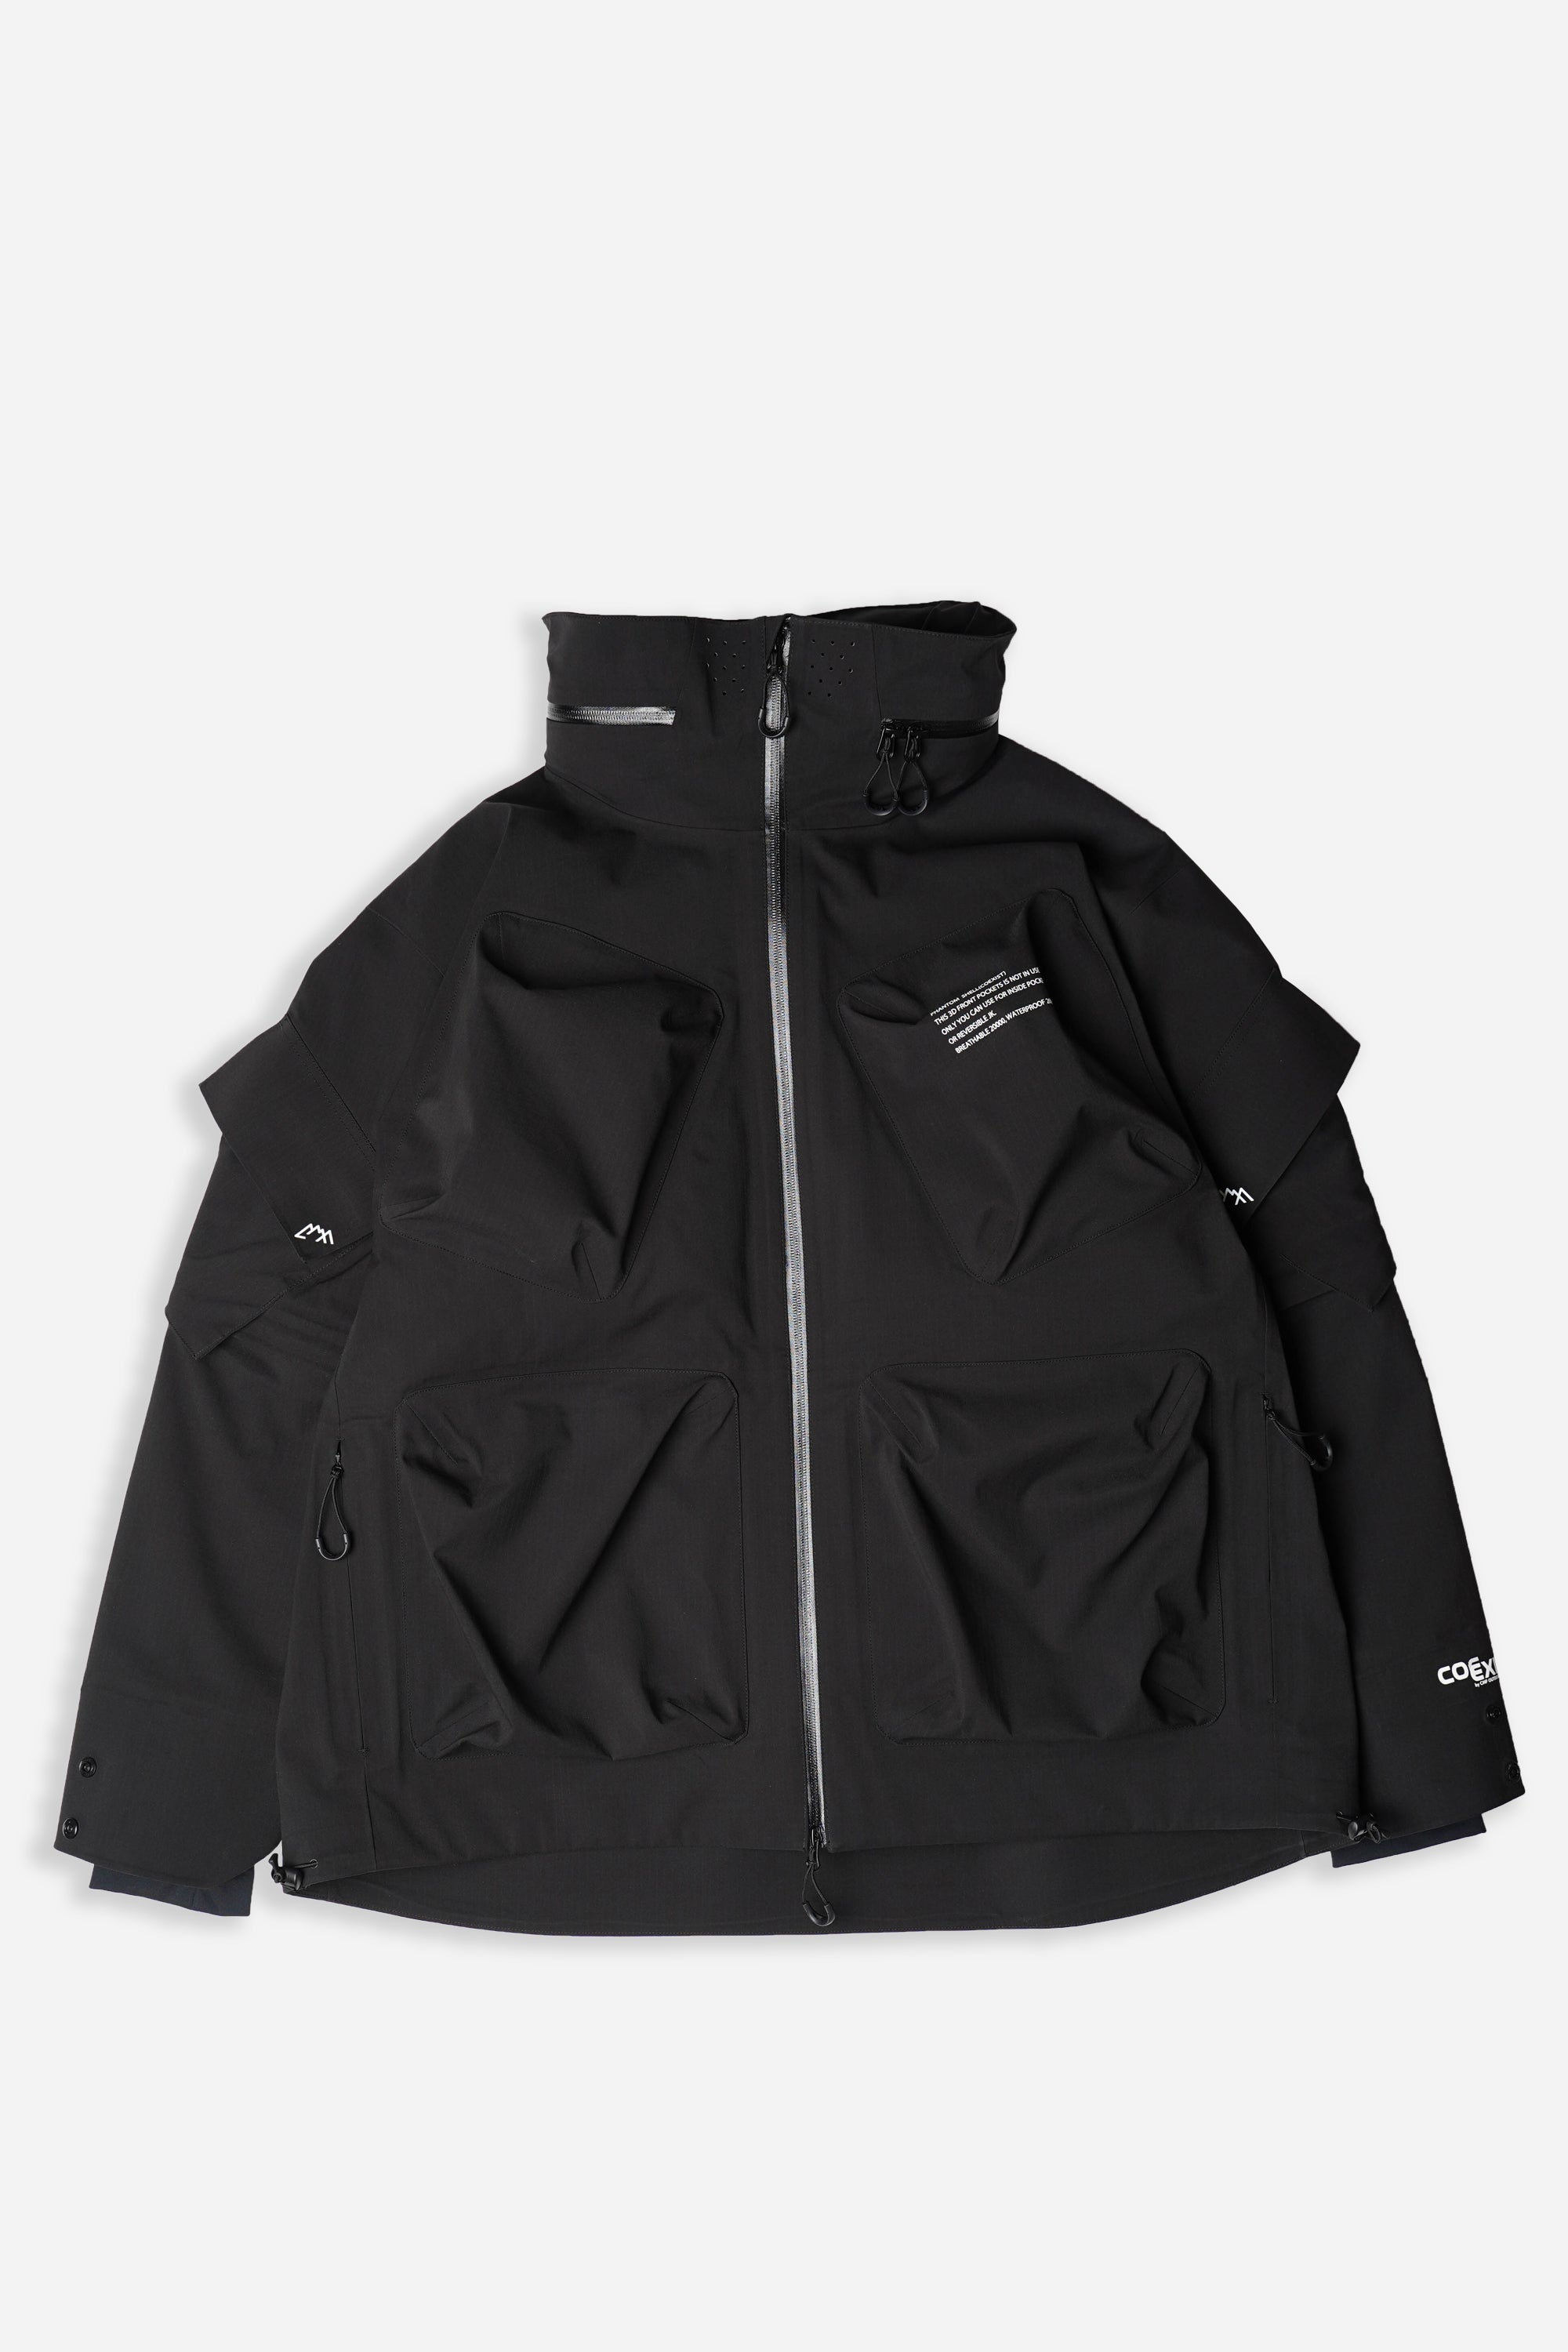 Comfy Outdoor Garment Phantom Coexist Shell Black – HAVN